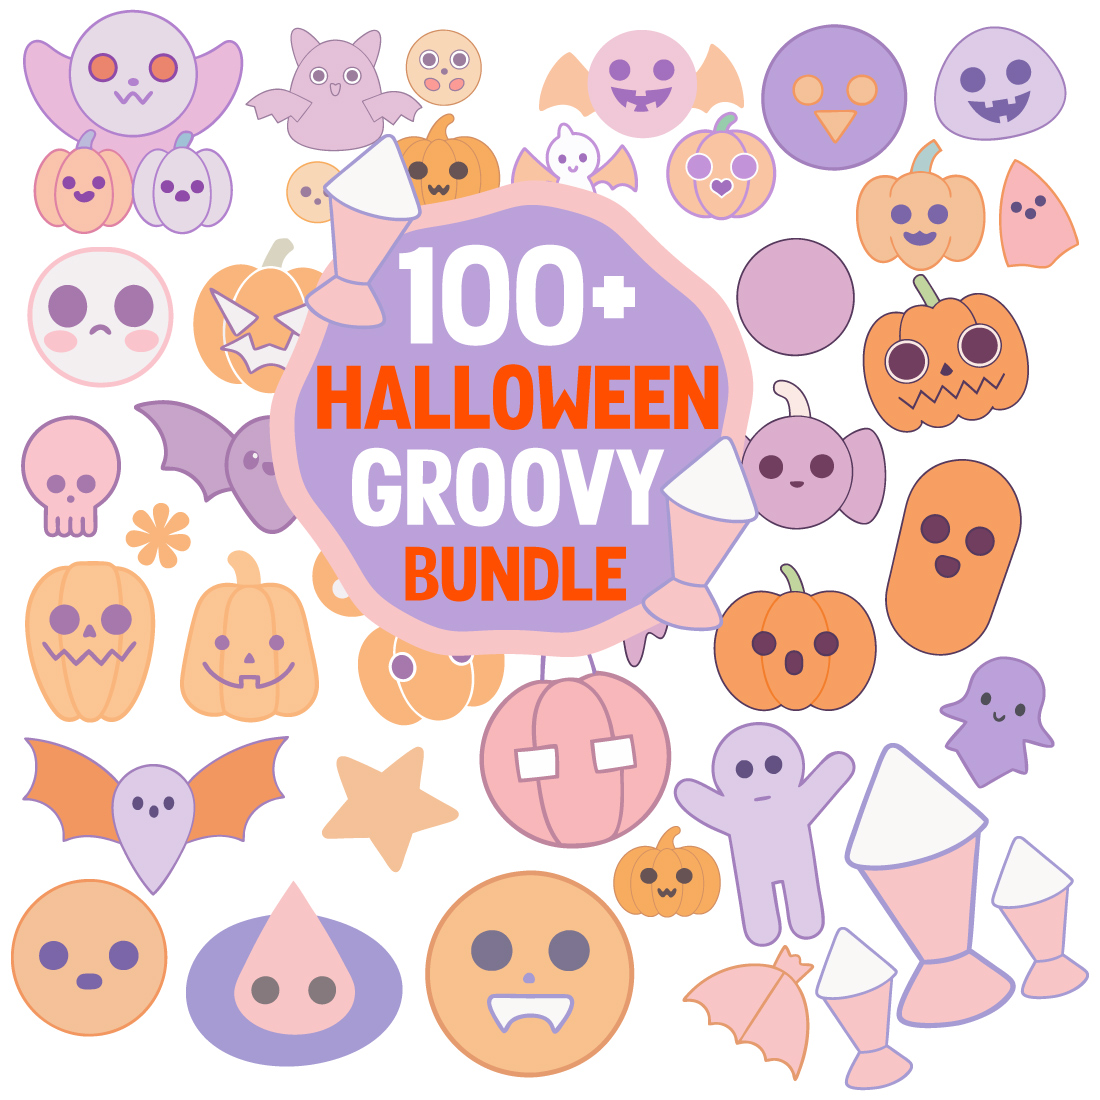 100+ Happy Halloween Mega Bundle Offer Halloween Vector Pack Halloween Tshirt and Bulk Offer Halloween Bundle cover image.